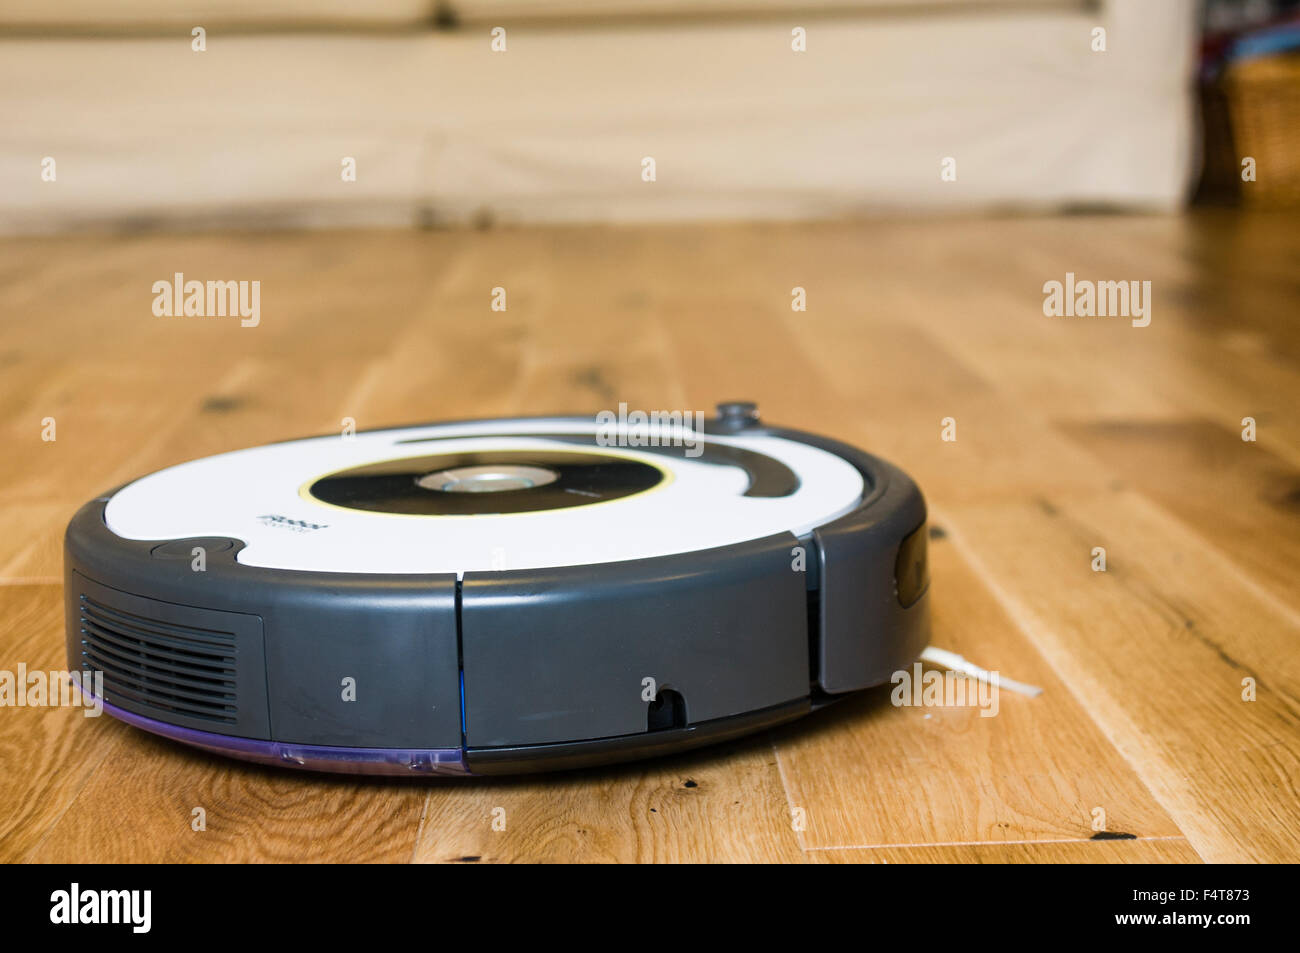 An iRobot Roomba robotic vacuum cleaner cleaning a wooden living room floor Stock Photo